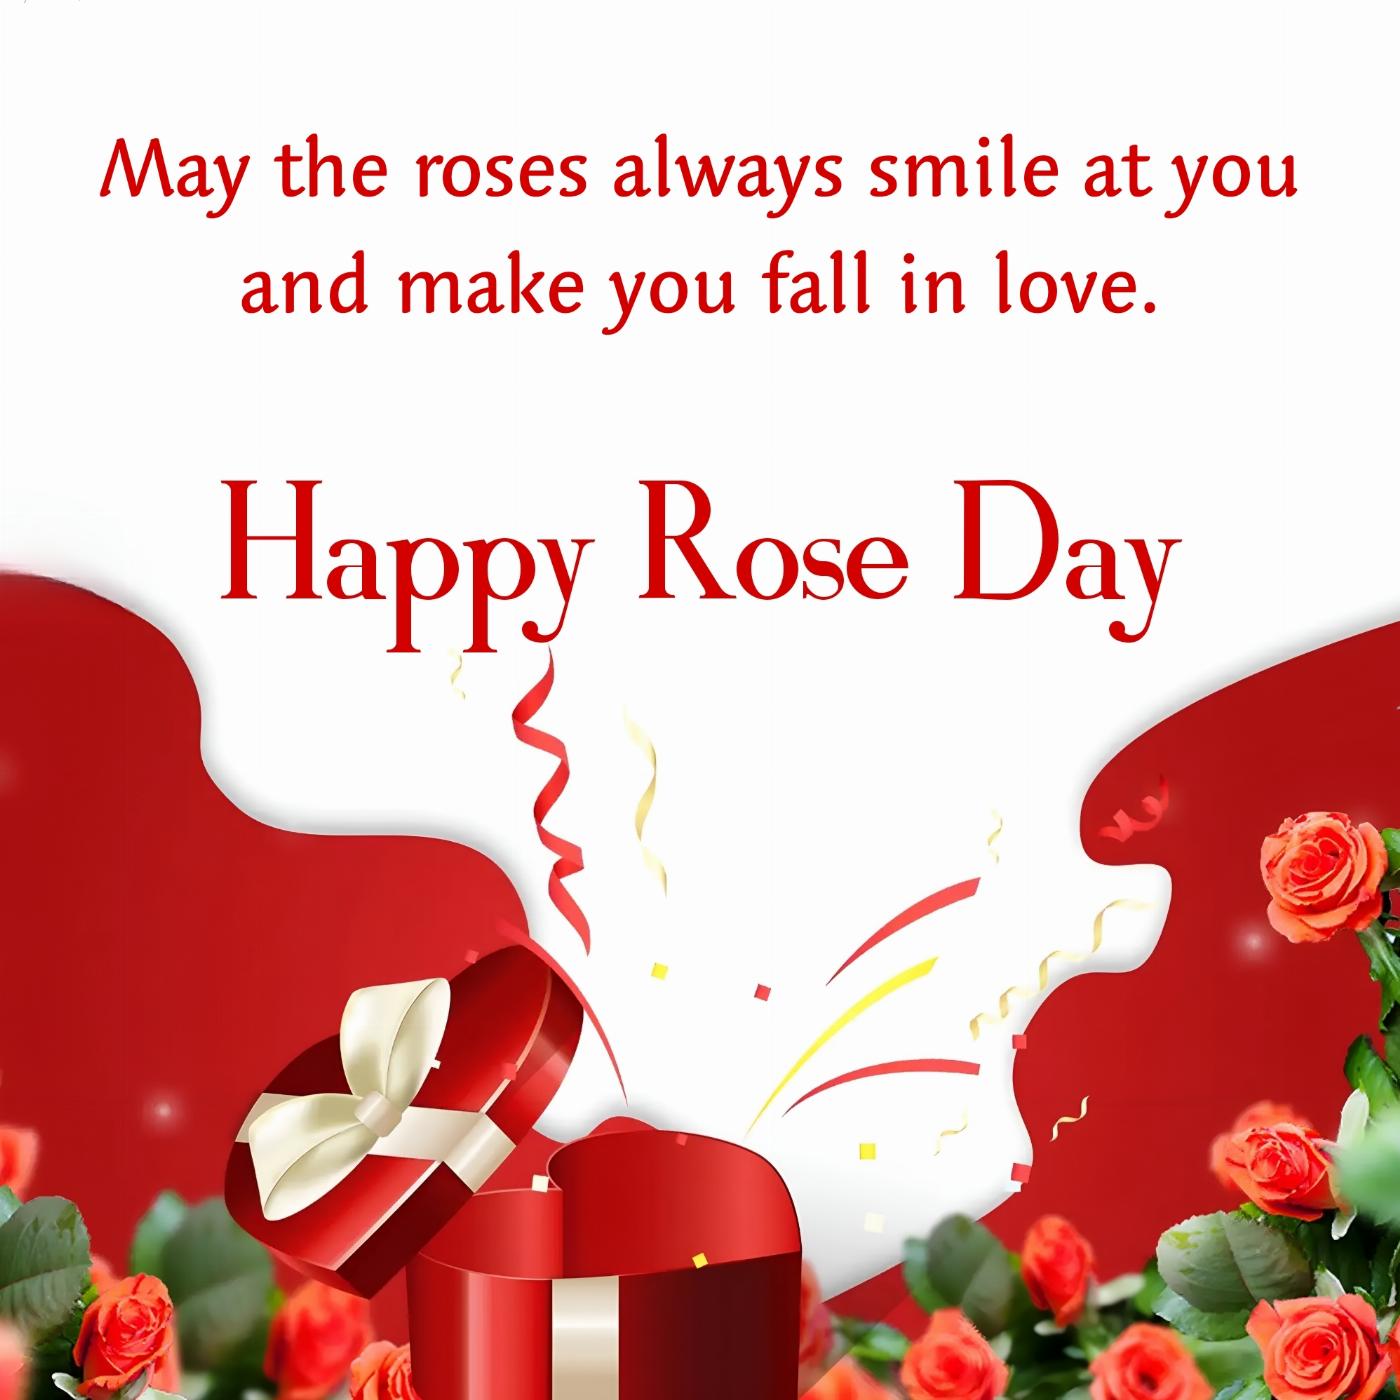 May the roses always smile at you and make you fall in love - ShayariMaza